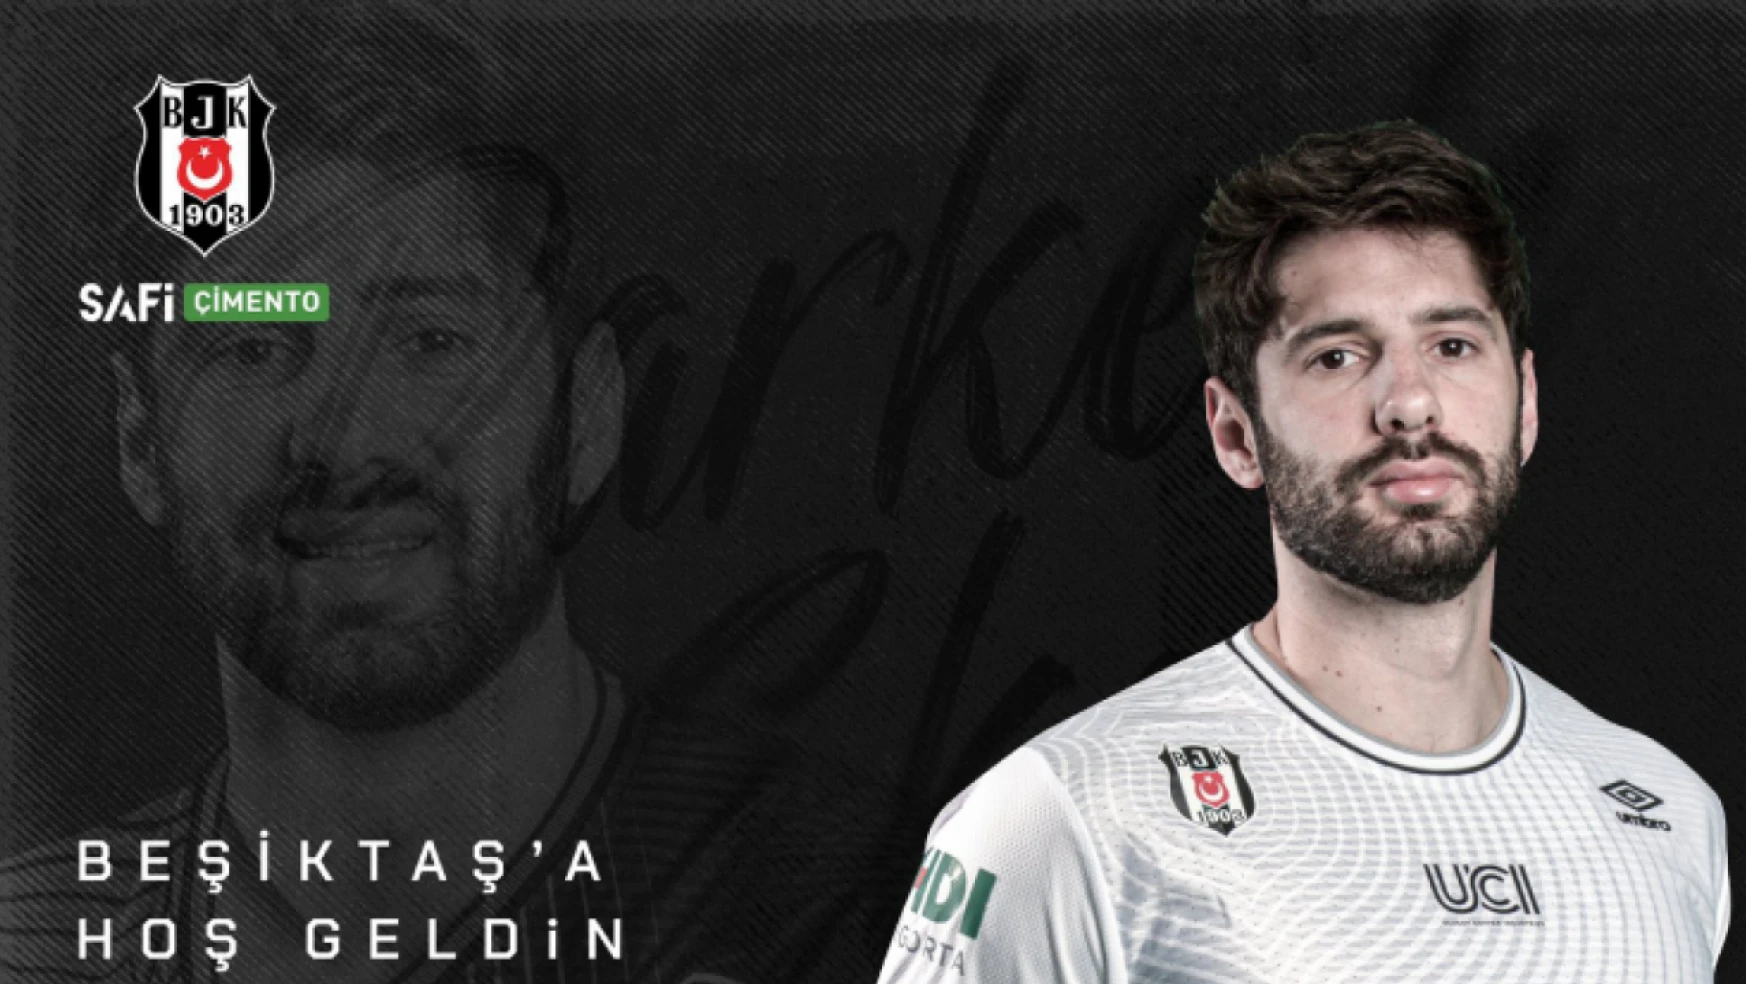 Beşiktaş Safi Çimento, İspanyol Oyuncu Joan Amigo Boada'yı Transfer Etti